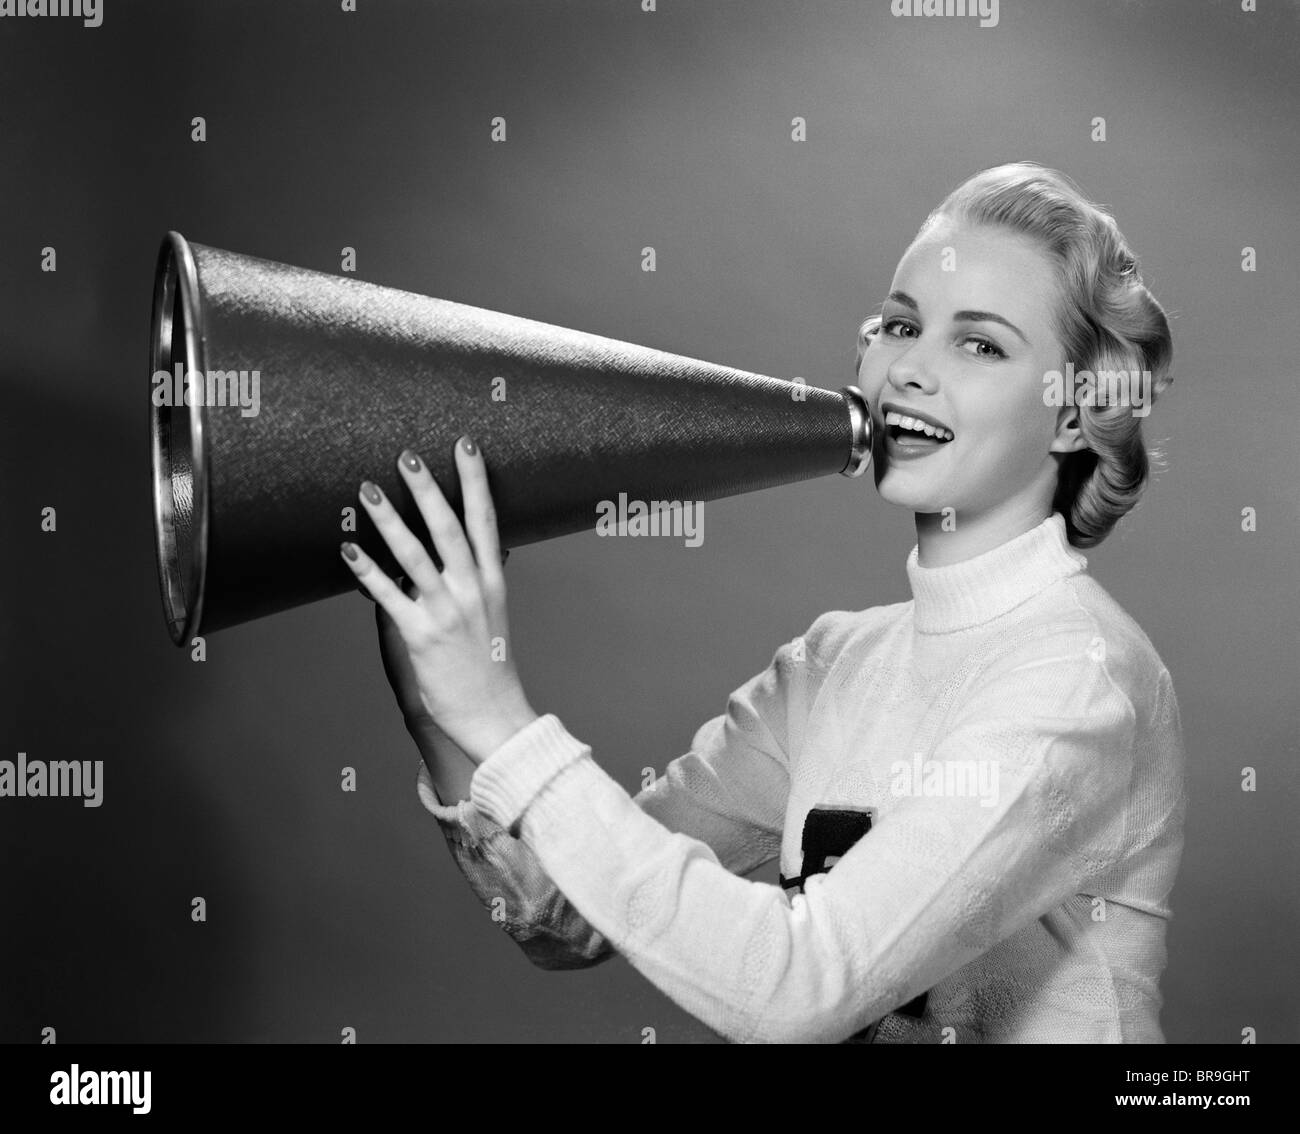 1950s BLONDE WOMAN CHEERLEADER YELLING INTO MEGAPHONE LOOKING AT CAMERA Stock Photo